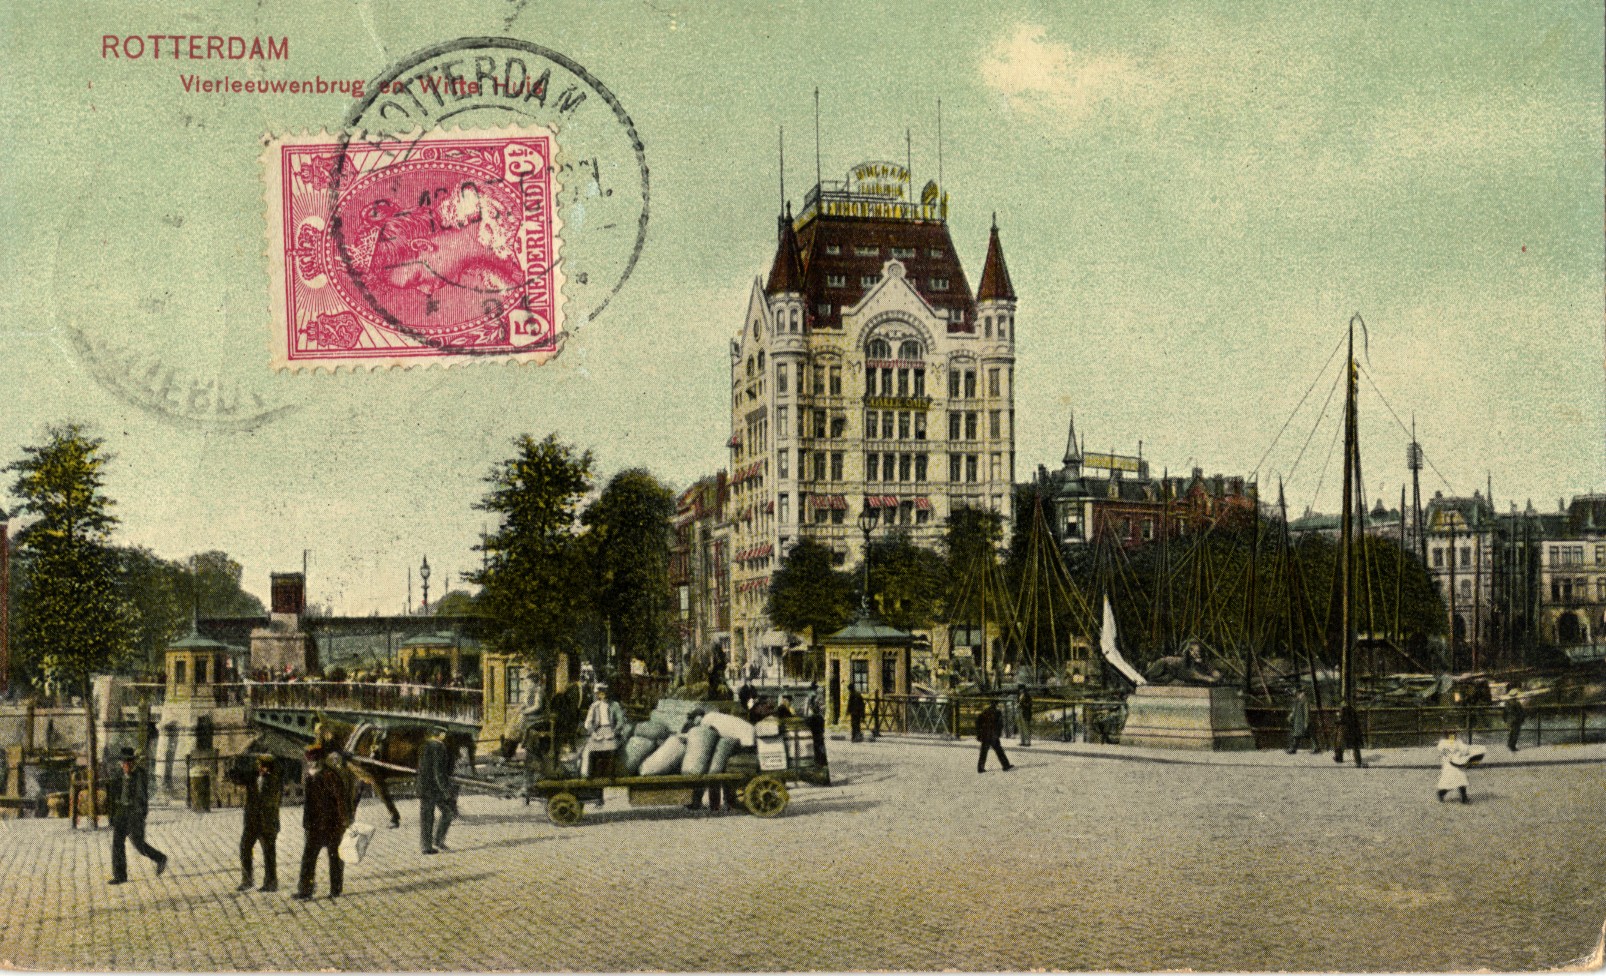 Rotterdam, 1907: Vierleeuwenbrug en Witte Huis